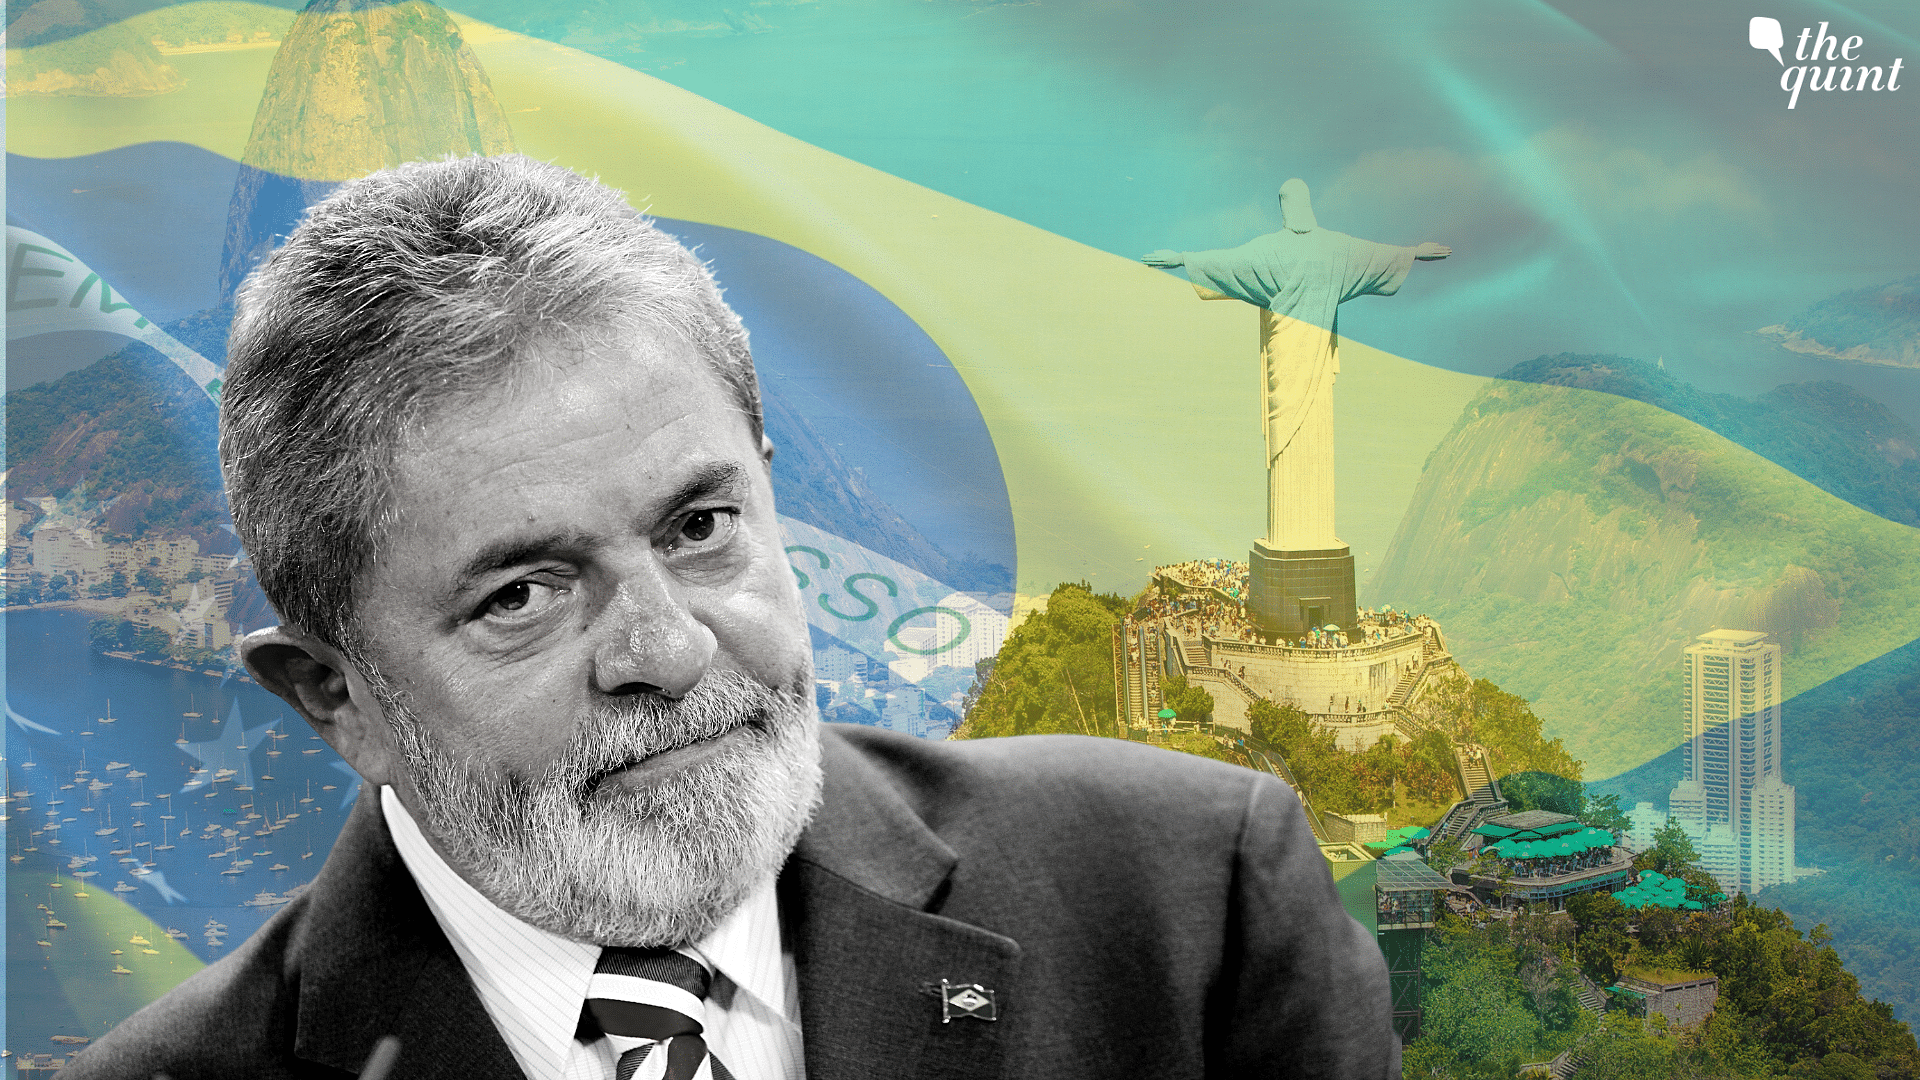 <div class="paragraphs"><p>Veteran leftist and former President of Brazil <a href="https://www.thequint.com/news/world/brazil-presidential-election-sunday-lula-da-silva-vs-jair-bolsonaro-who-are-the-candidates-profile-polarisation-violence#read-more">Luiz Inácio Lula da Silva </a>defeated far-right incumbent <a href="https://www.thequint.com/news/world/brazil-presidential-election-sunday-lula-da-silva-vs-jair-bolsonaro-who-are-the-candidates-profile-polarisation-violence#read-more">Jair Bolsonaro</a> in a stunning comeback.</p></div>